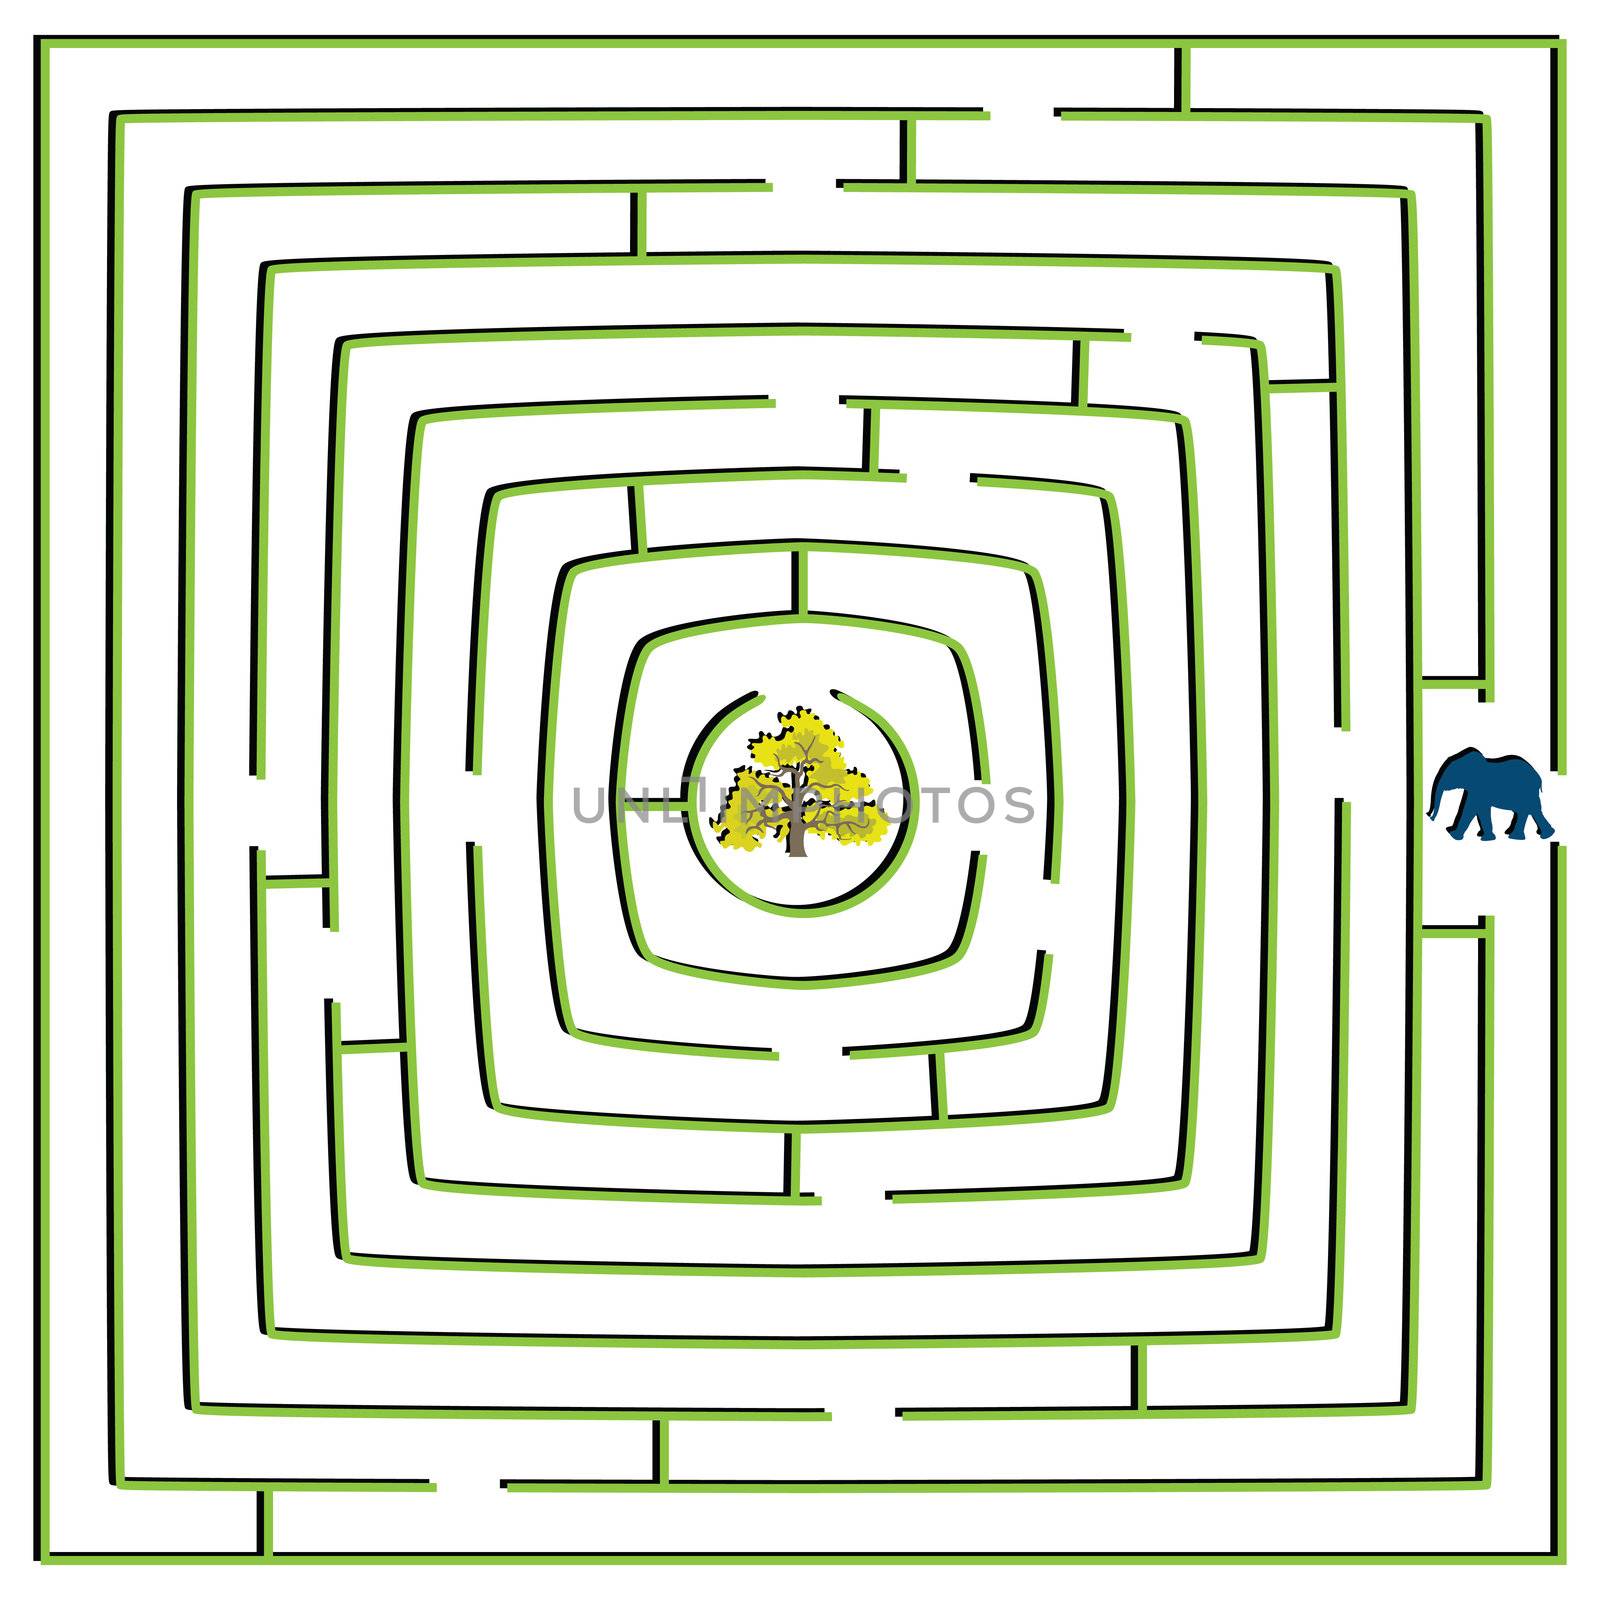 round square maze by robertosch